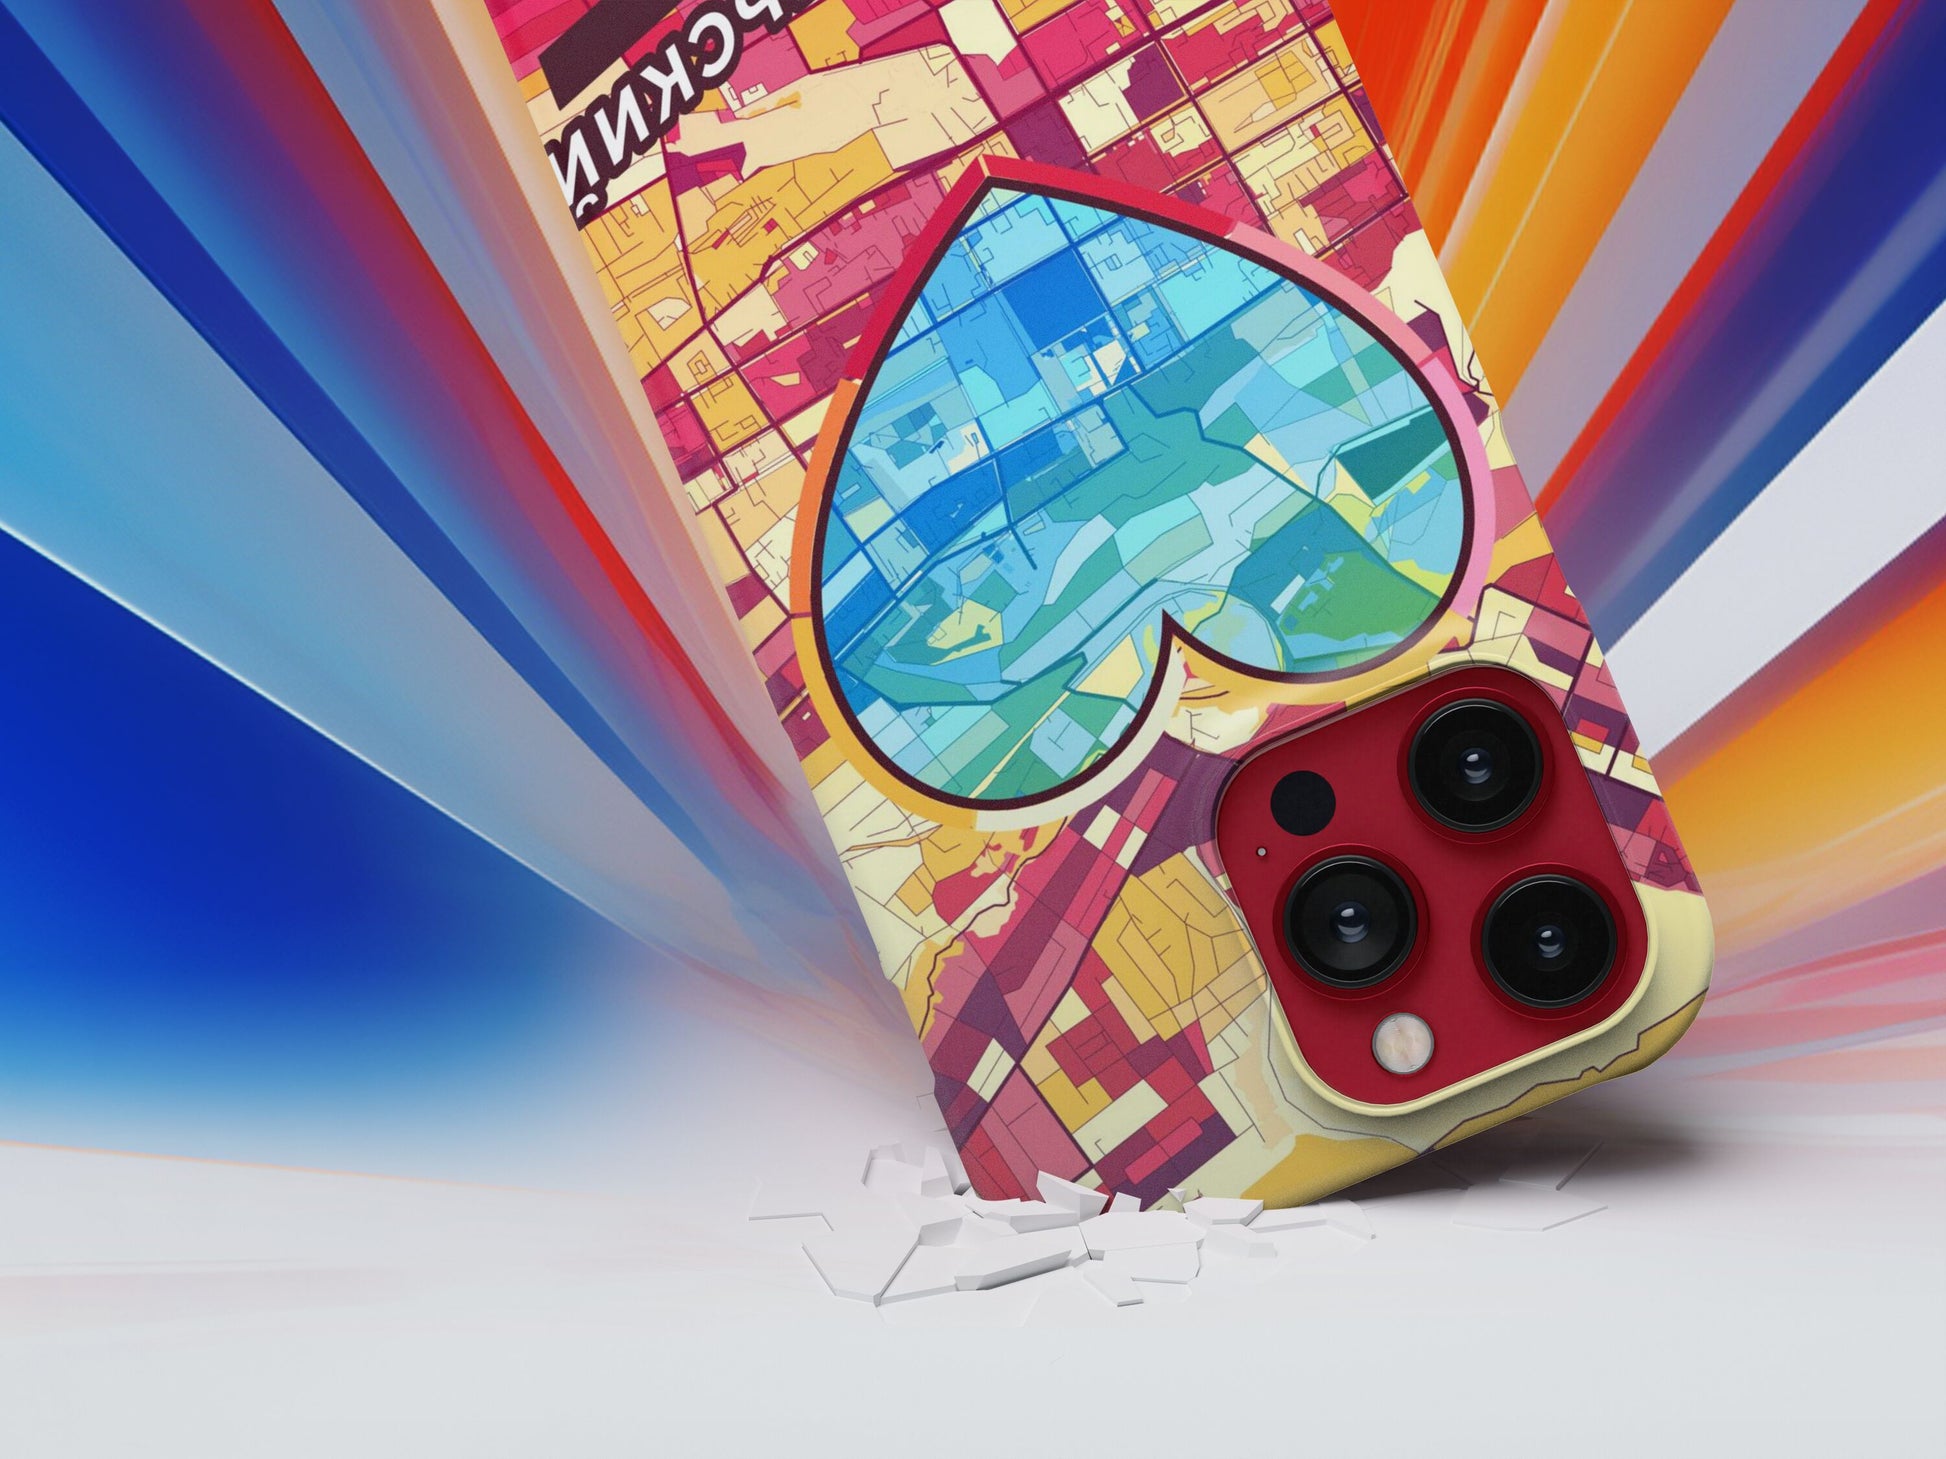 Stavropol Russia slim phone case with colorful icon